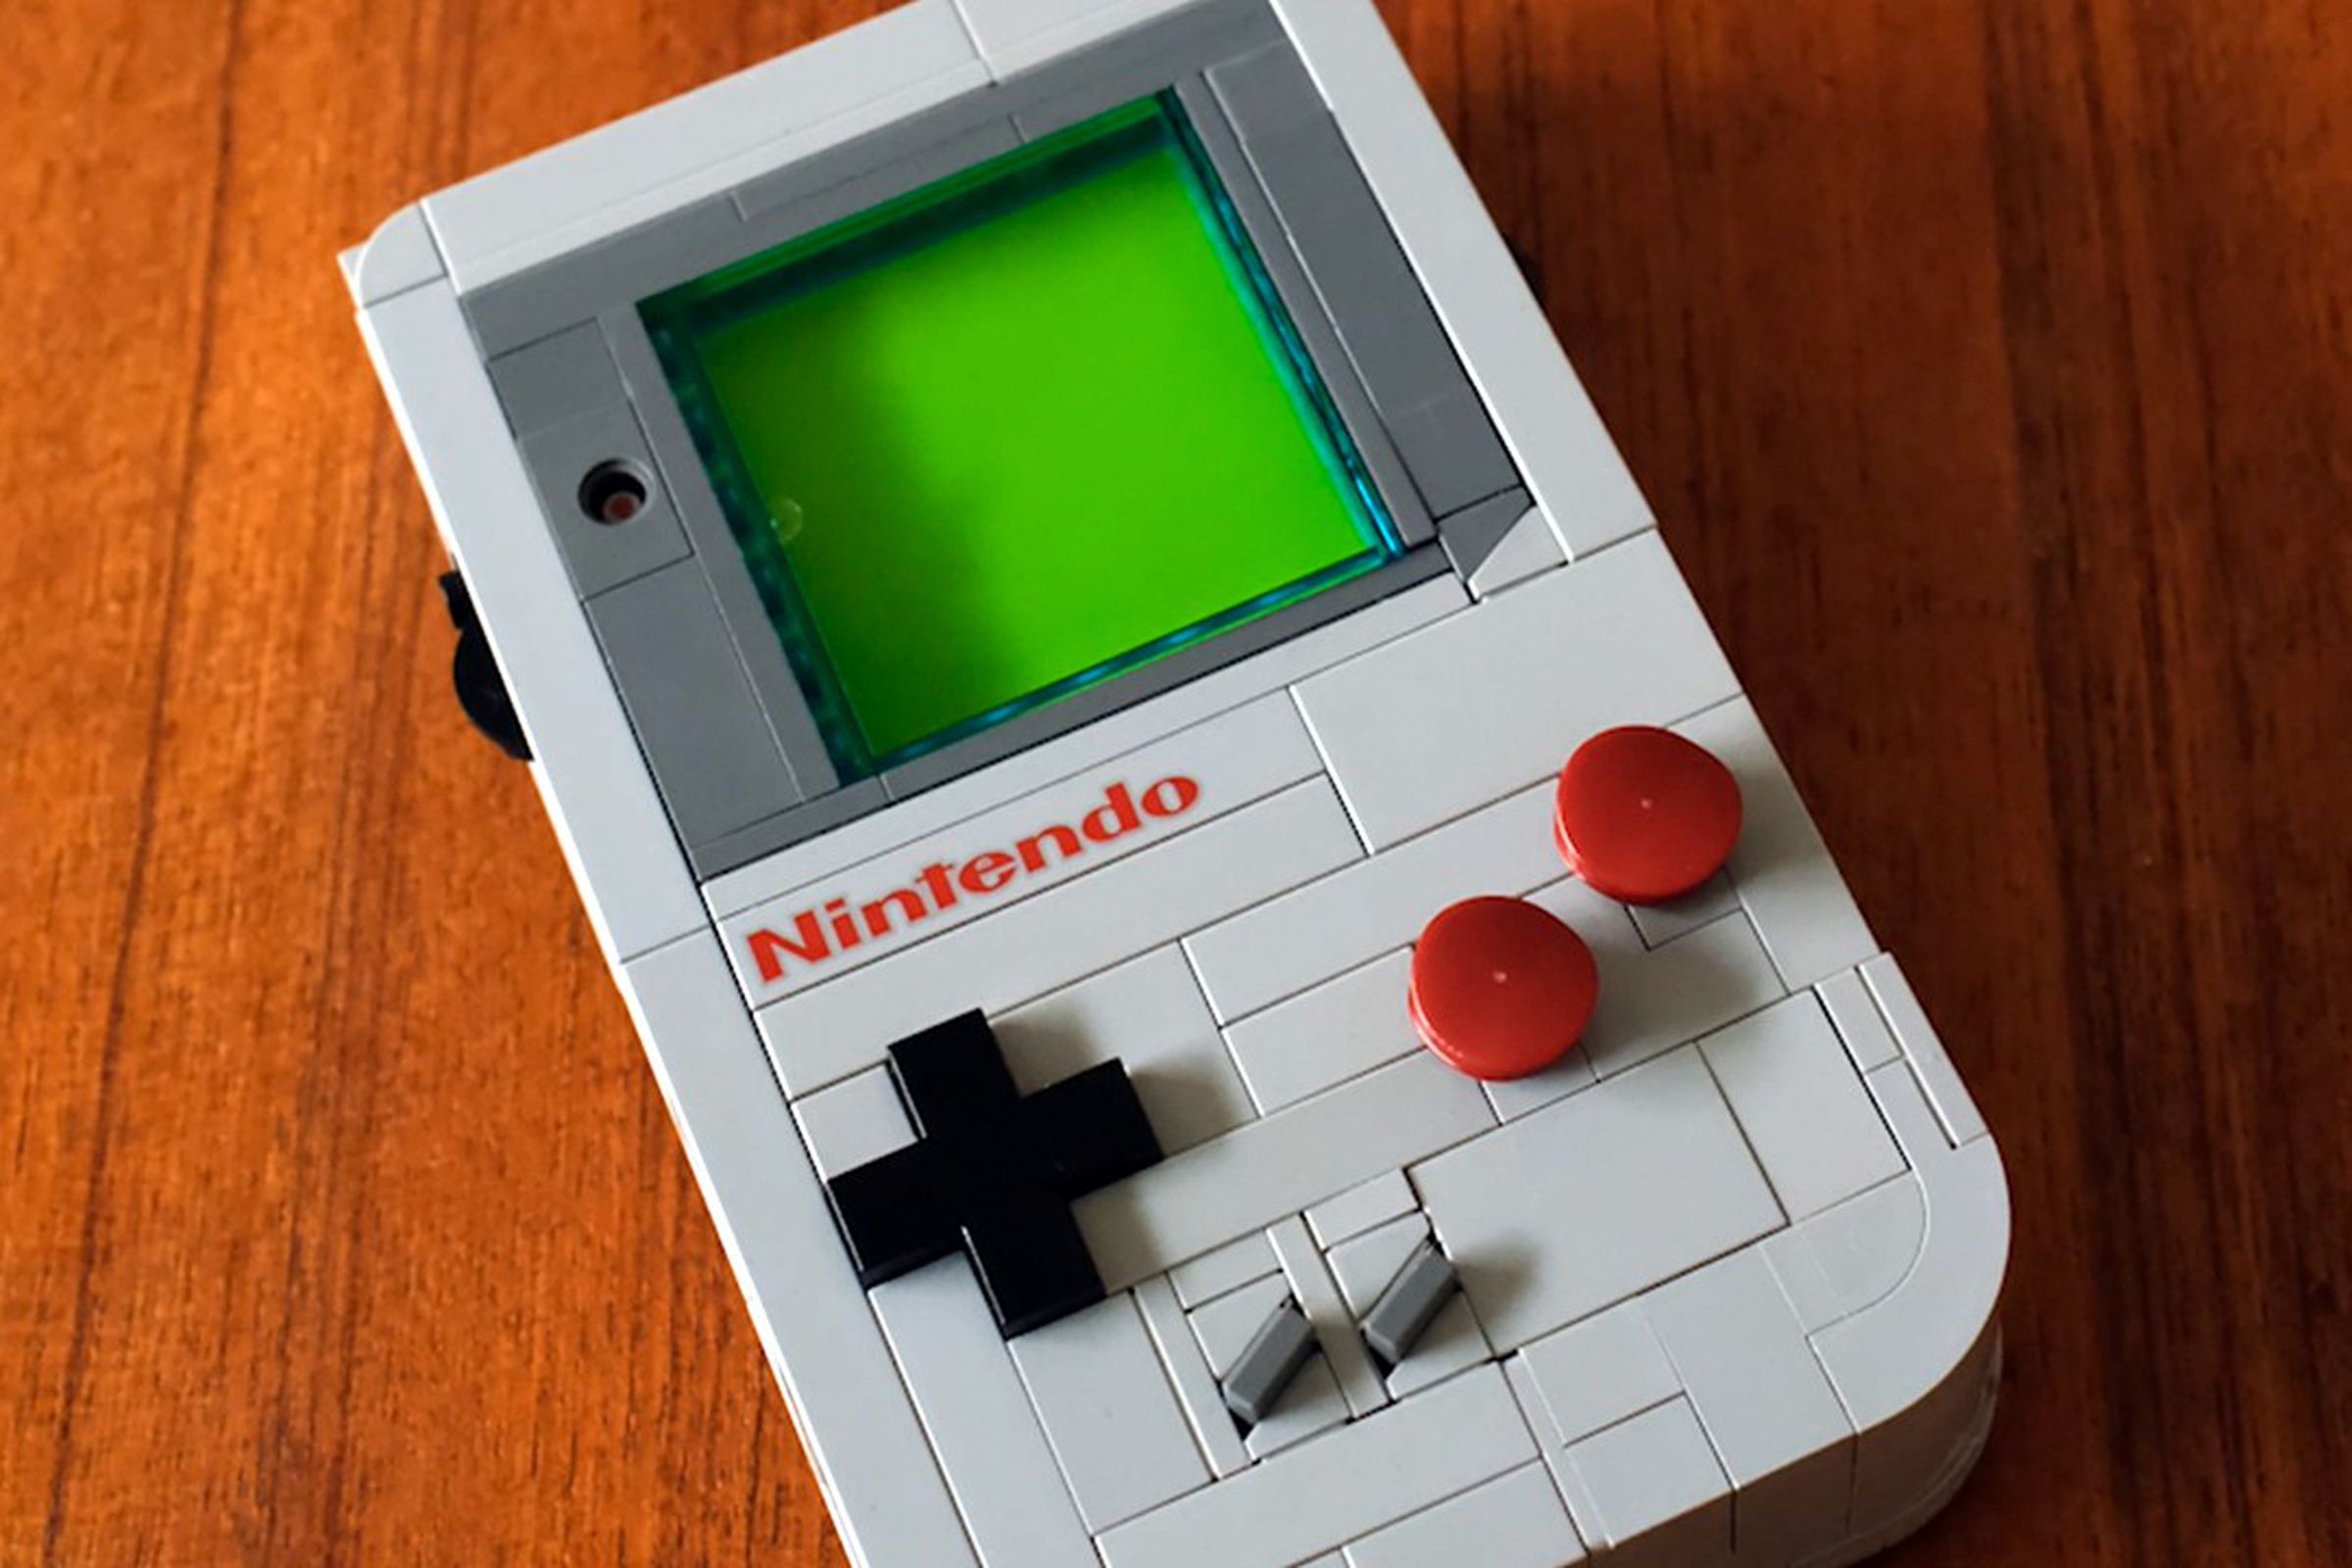 Nintendo Game Boy, Lego edition — not authorized by Lego or Nintendo.